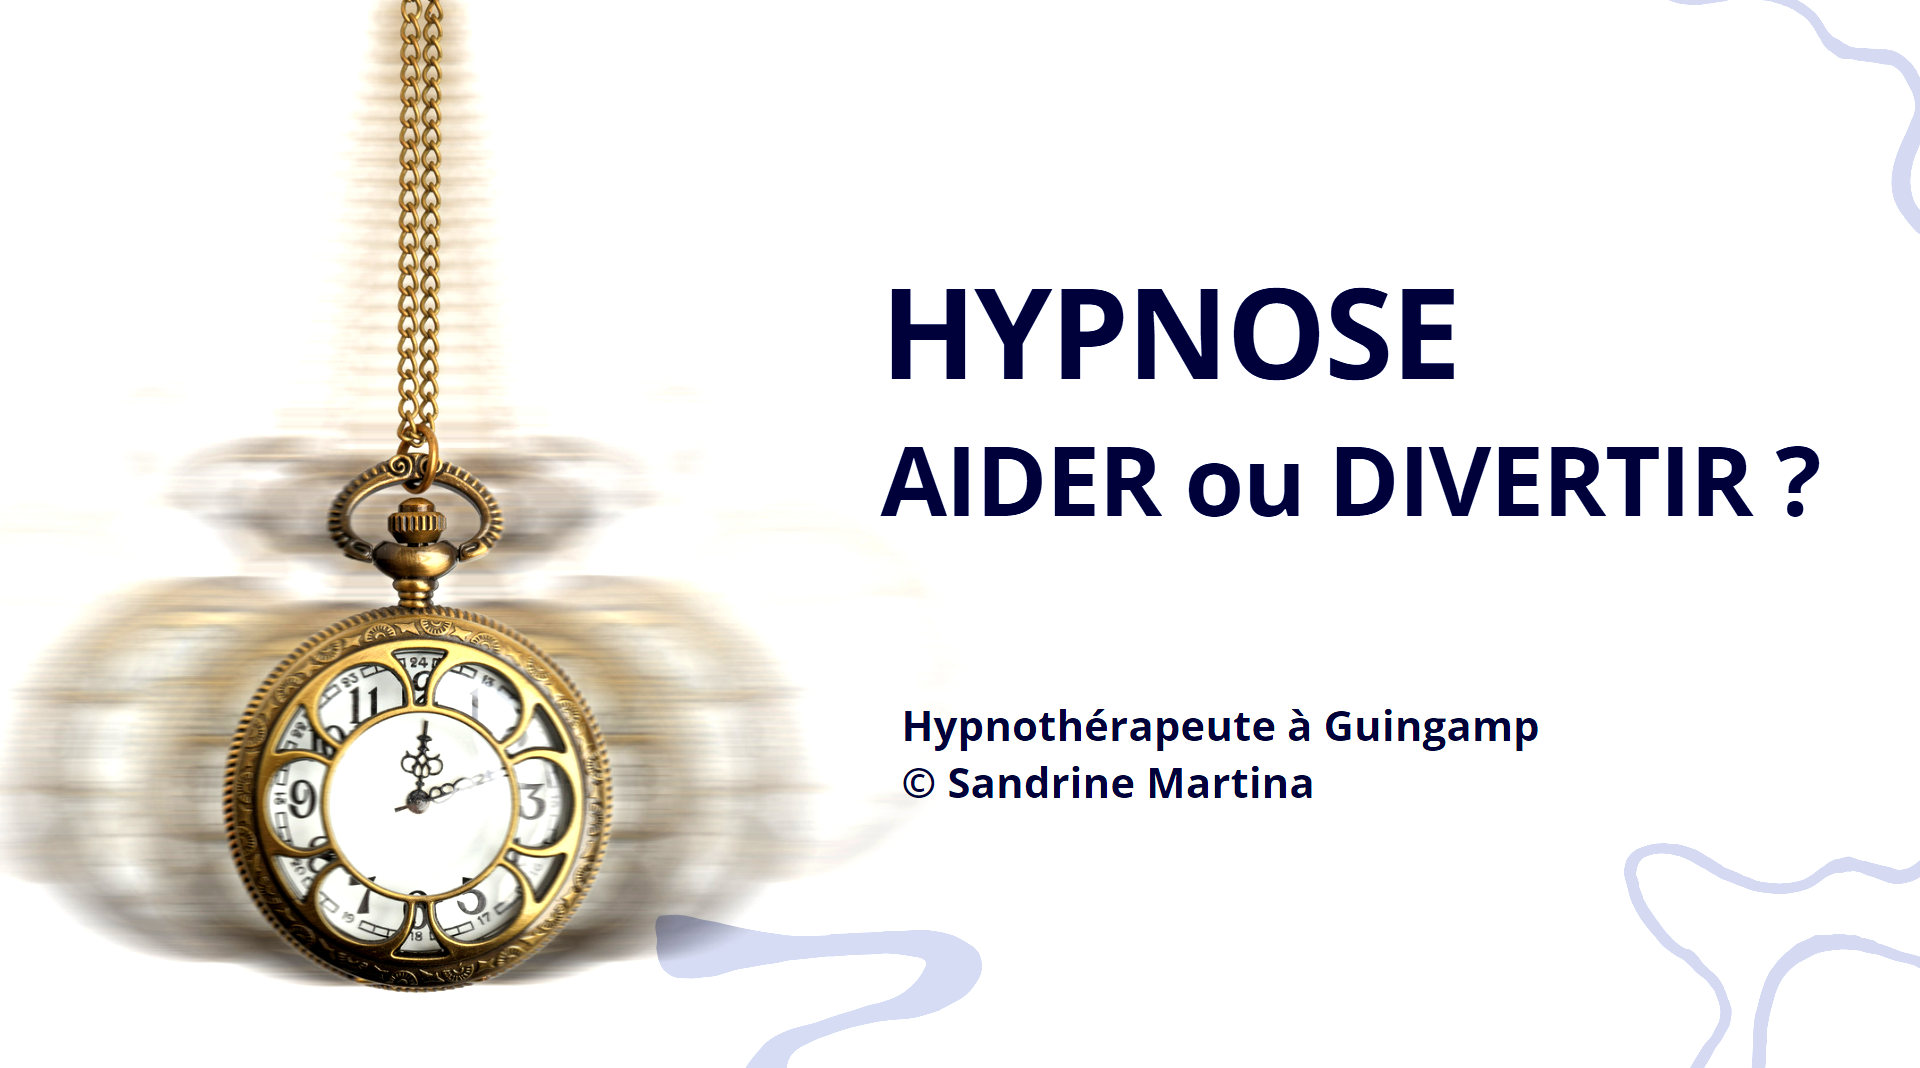 Hypnotiseur guingamp hypnose cotes d armor sandrine martina hypnose de spectacle ou hypnose d accompagnement 1 